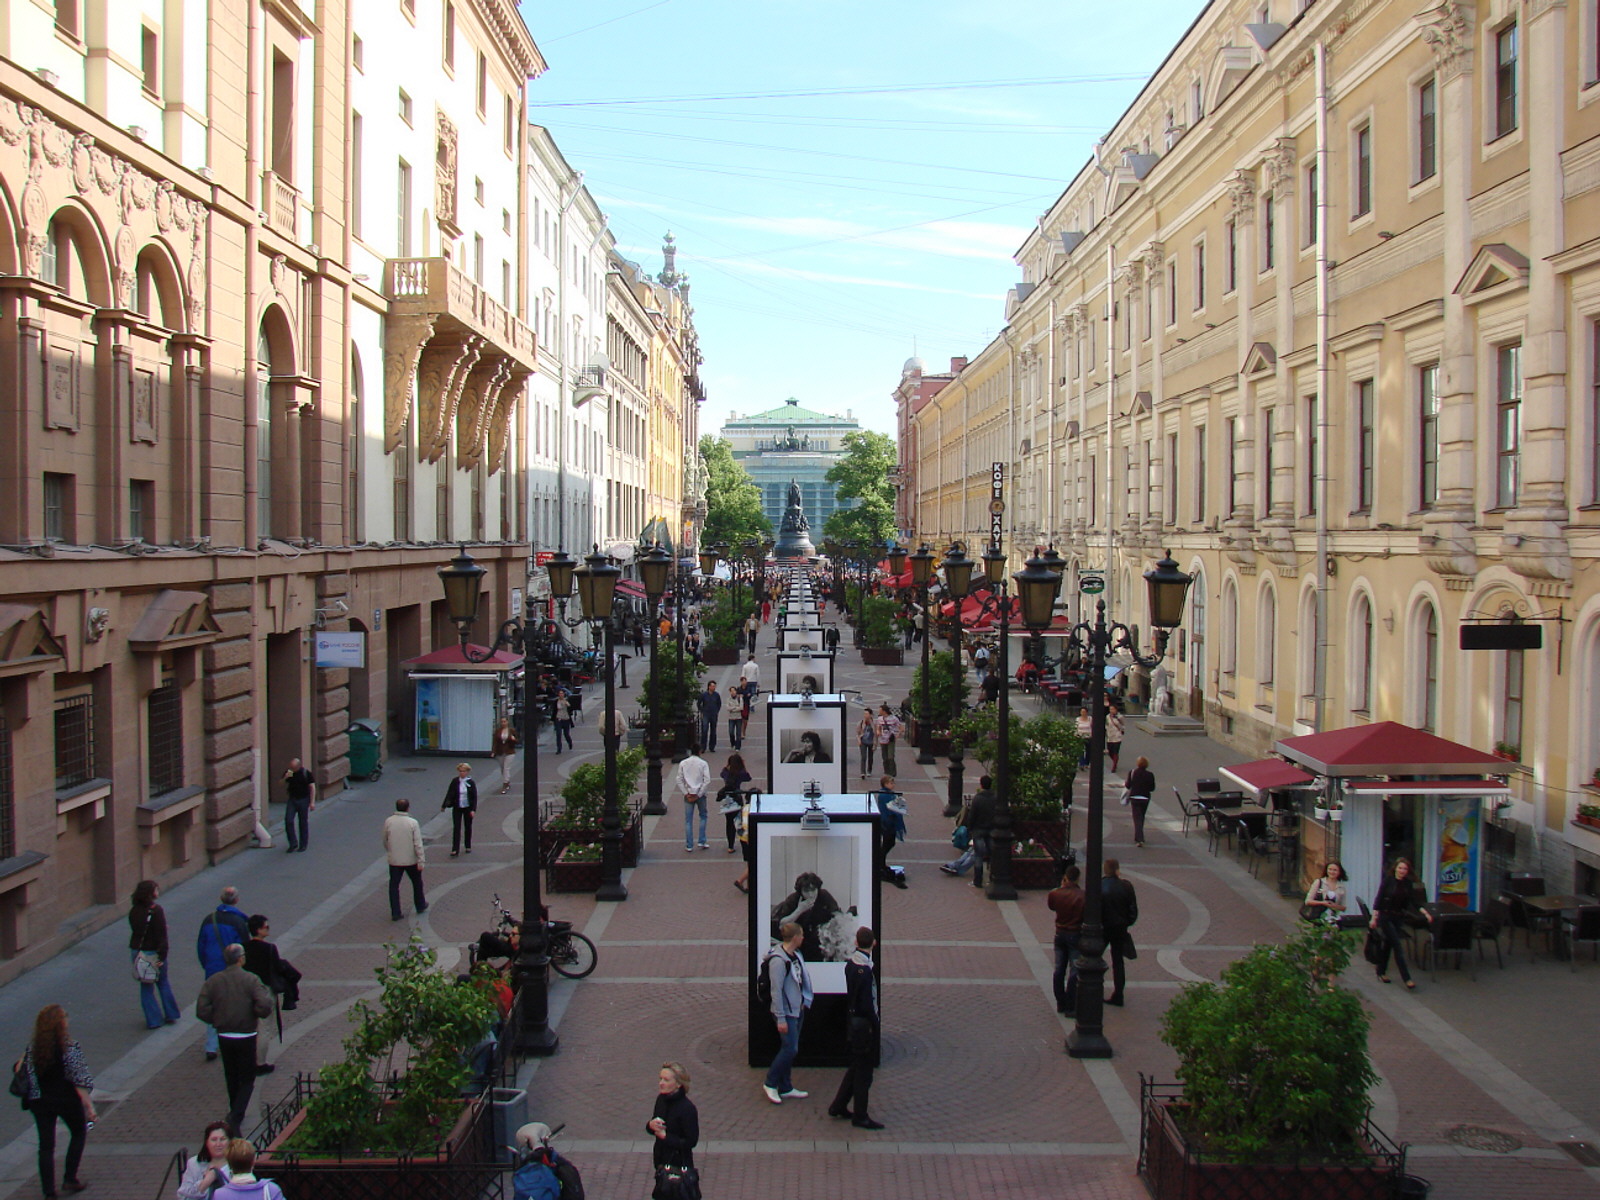 File:Malaya Sadovaya street, St. Petersburg, Russia.JPG - Wikipedia, the free encyclopedia